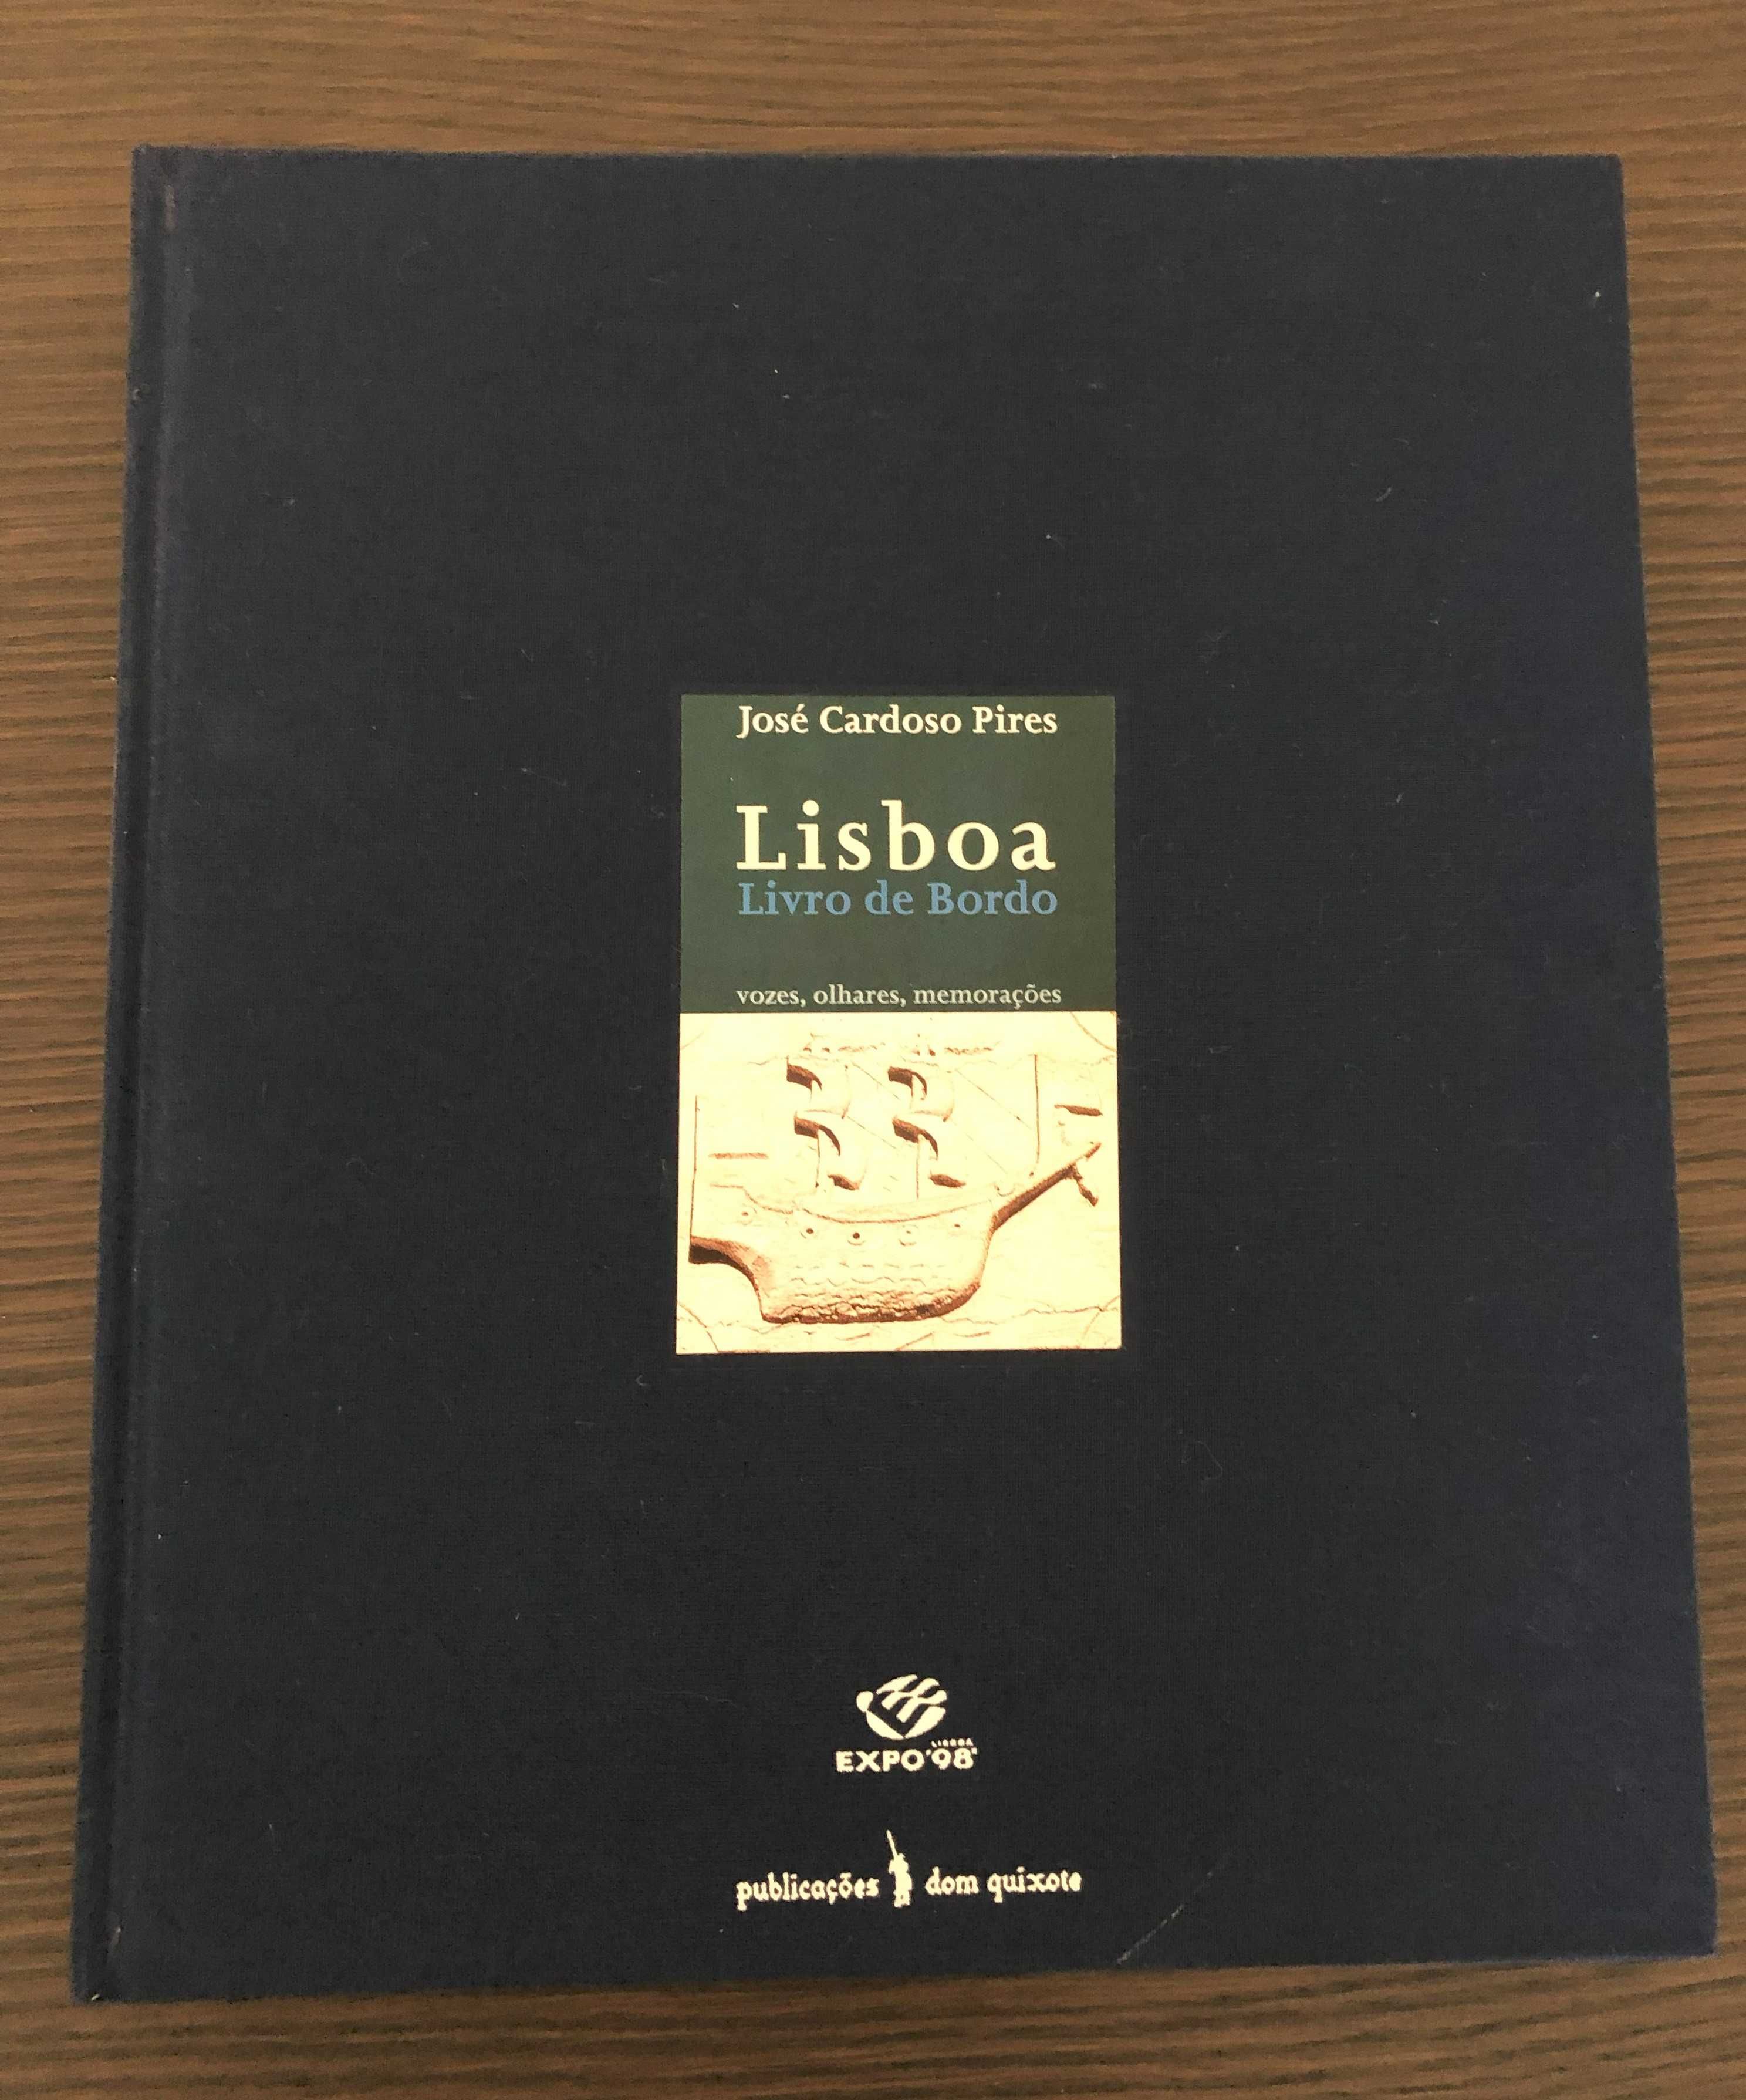 Lisboa - Livro de Bordo, de José Cardoso Pires